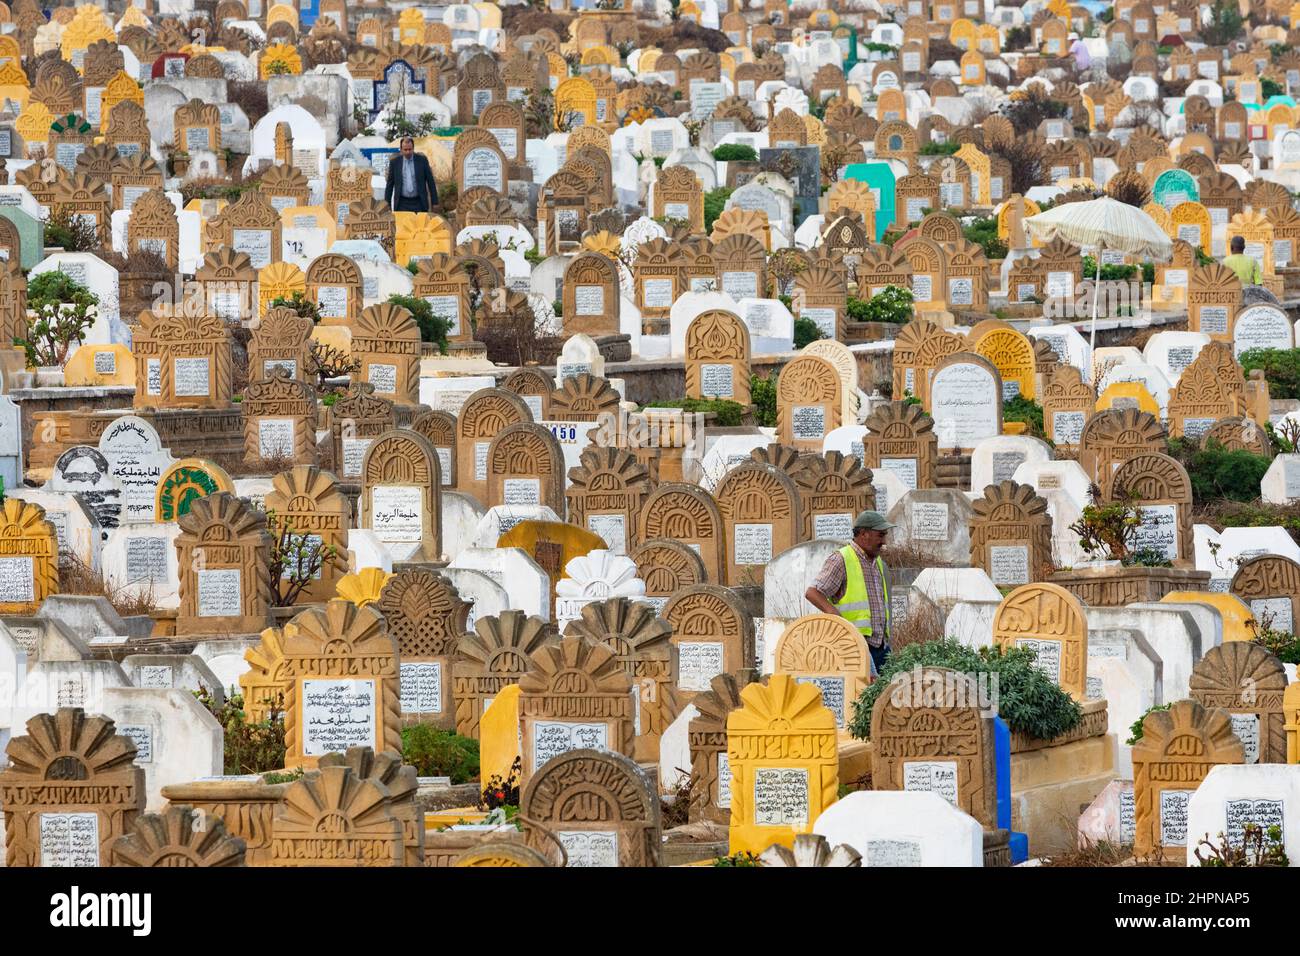 Sale cemetery outside the Rabat medina - Morocco. Stock Photo